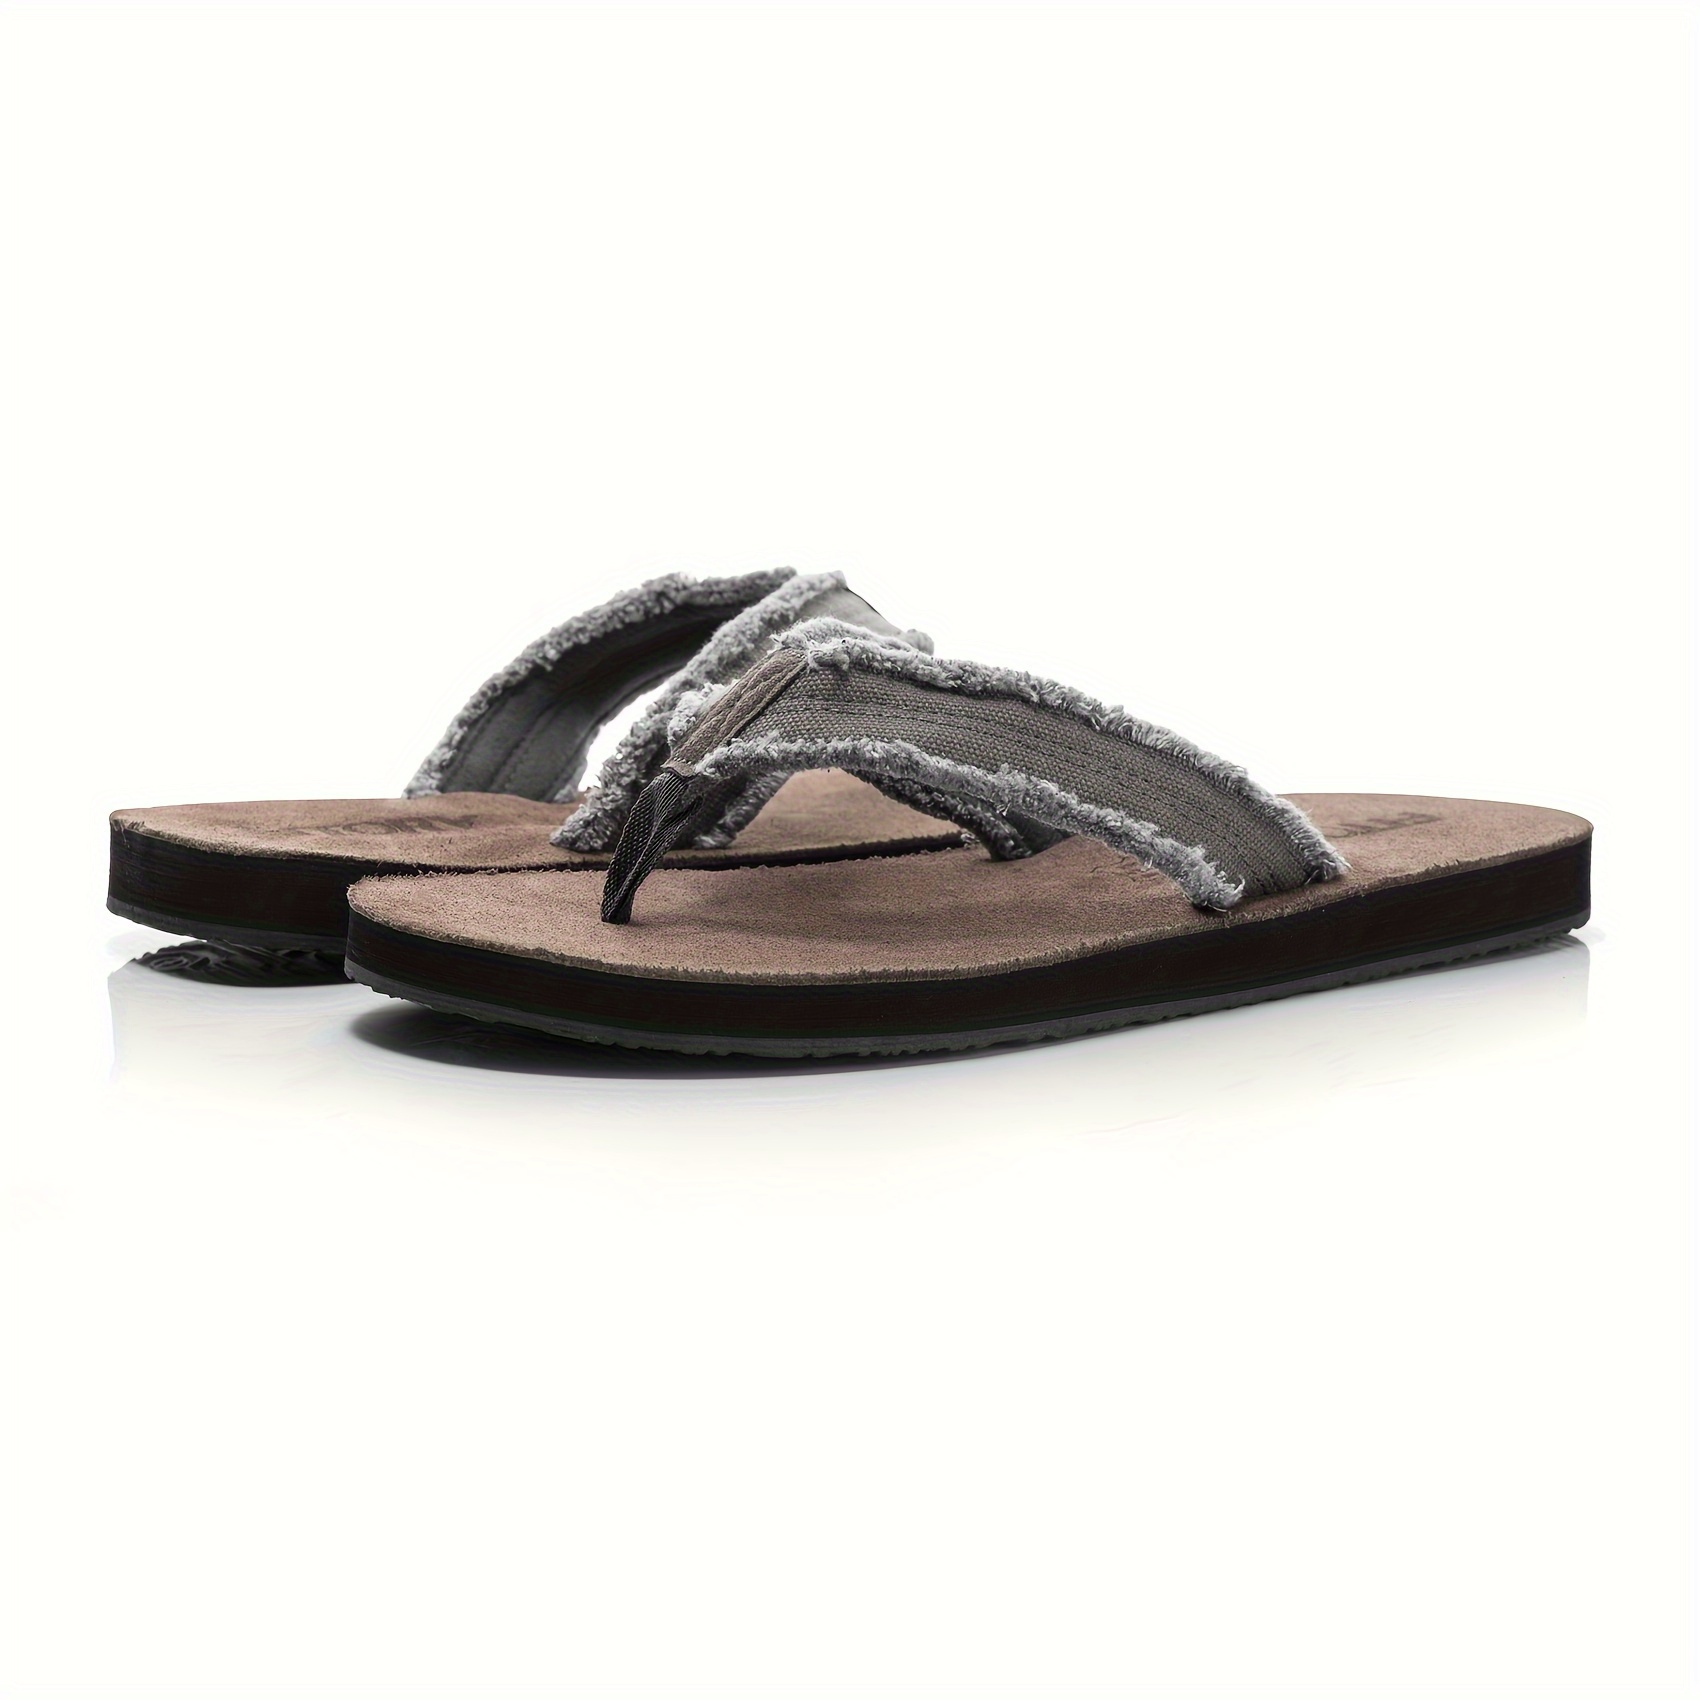 

Mens Leather Flip Flops, Thong Sandals Comfort Slippers For Summer Beach